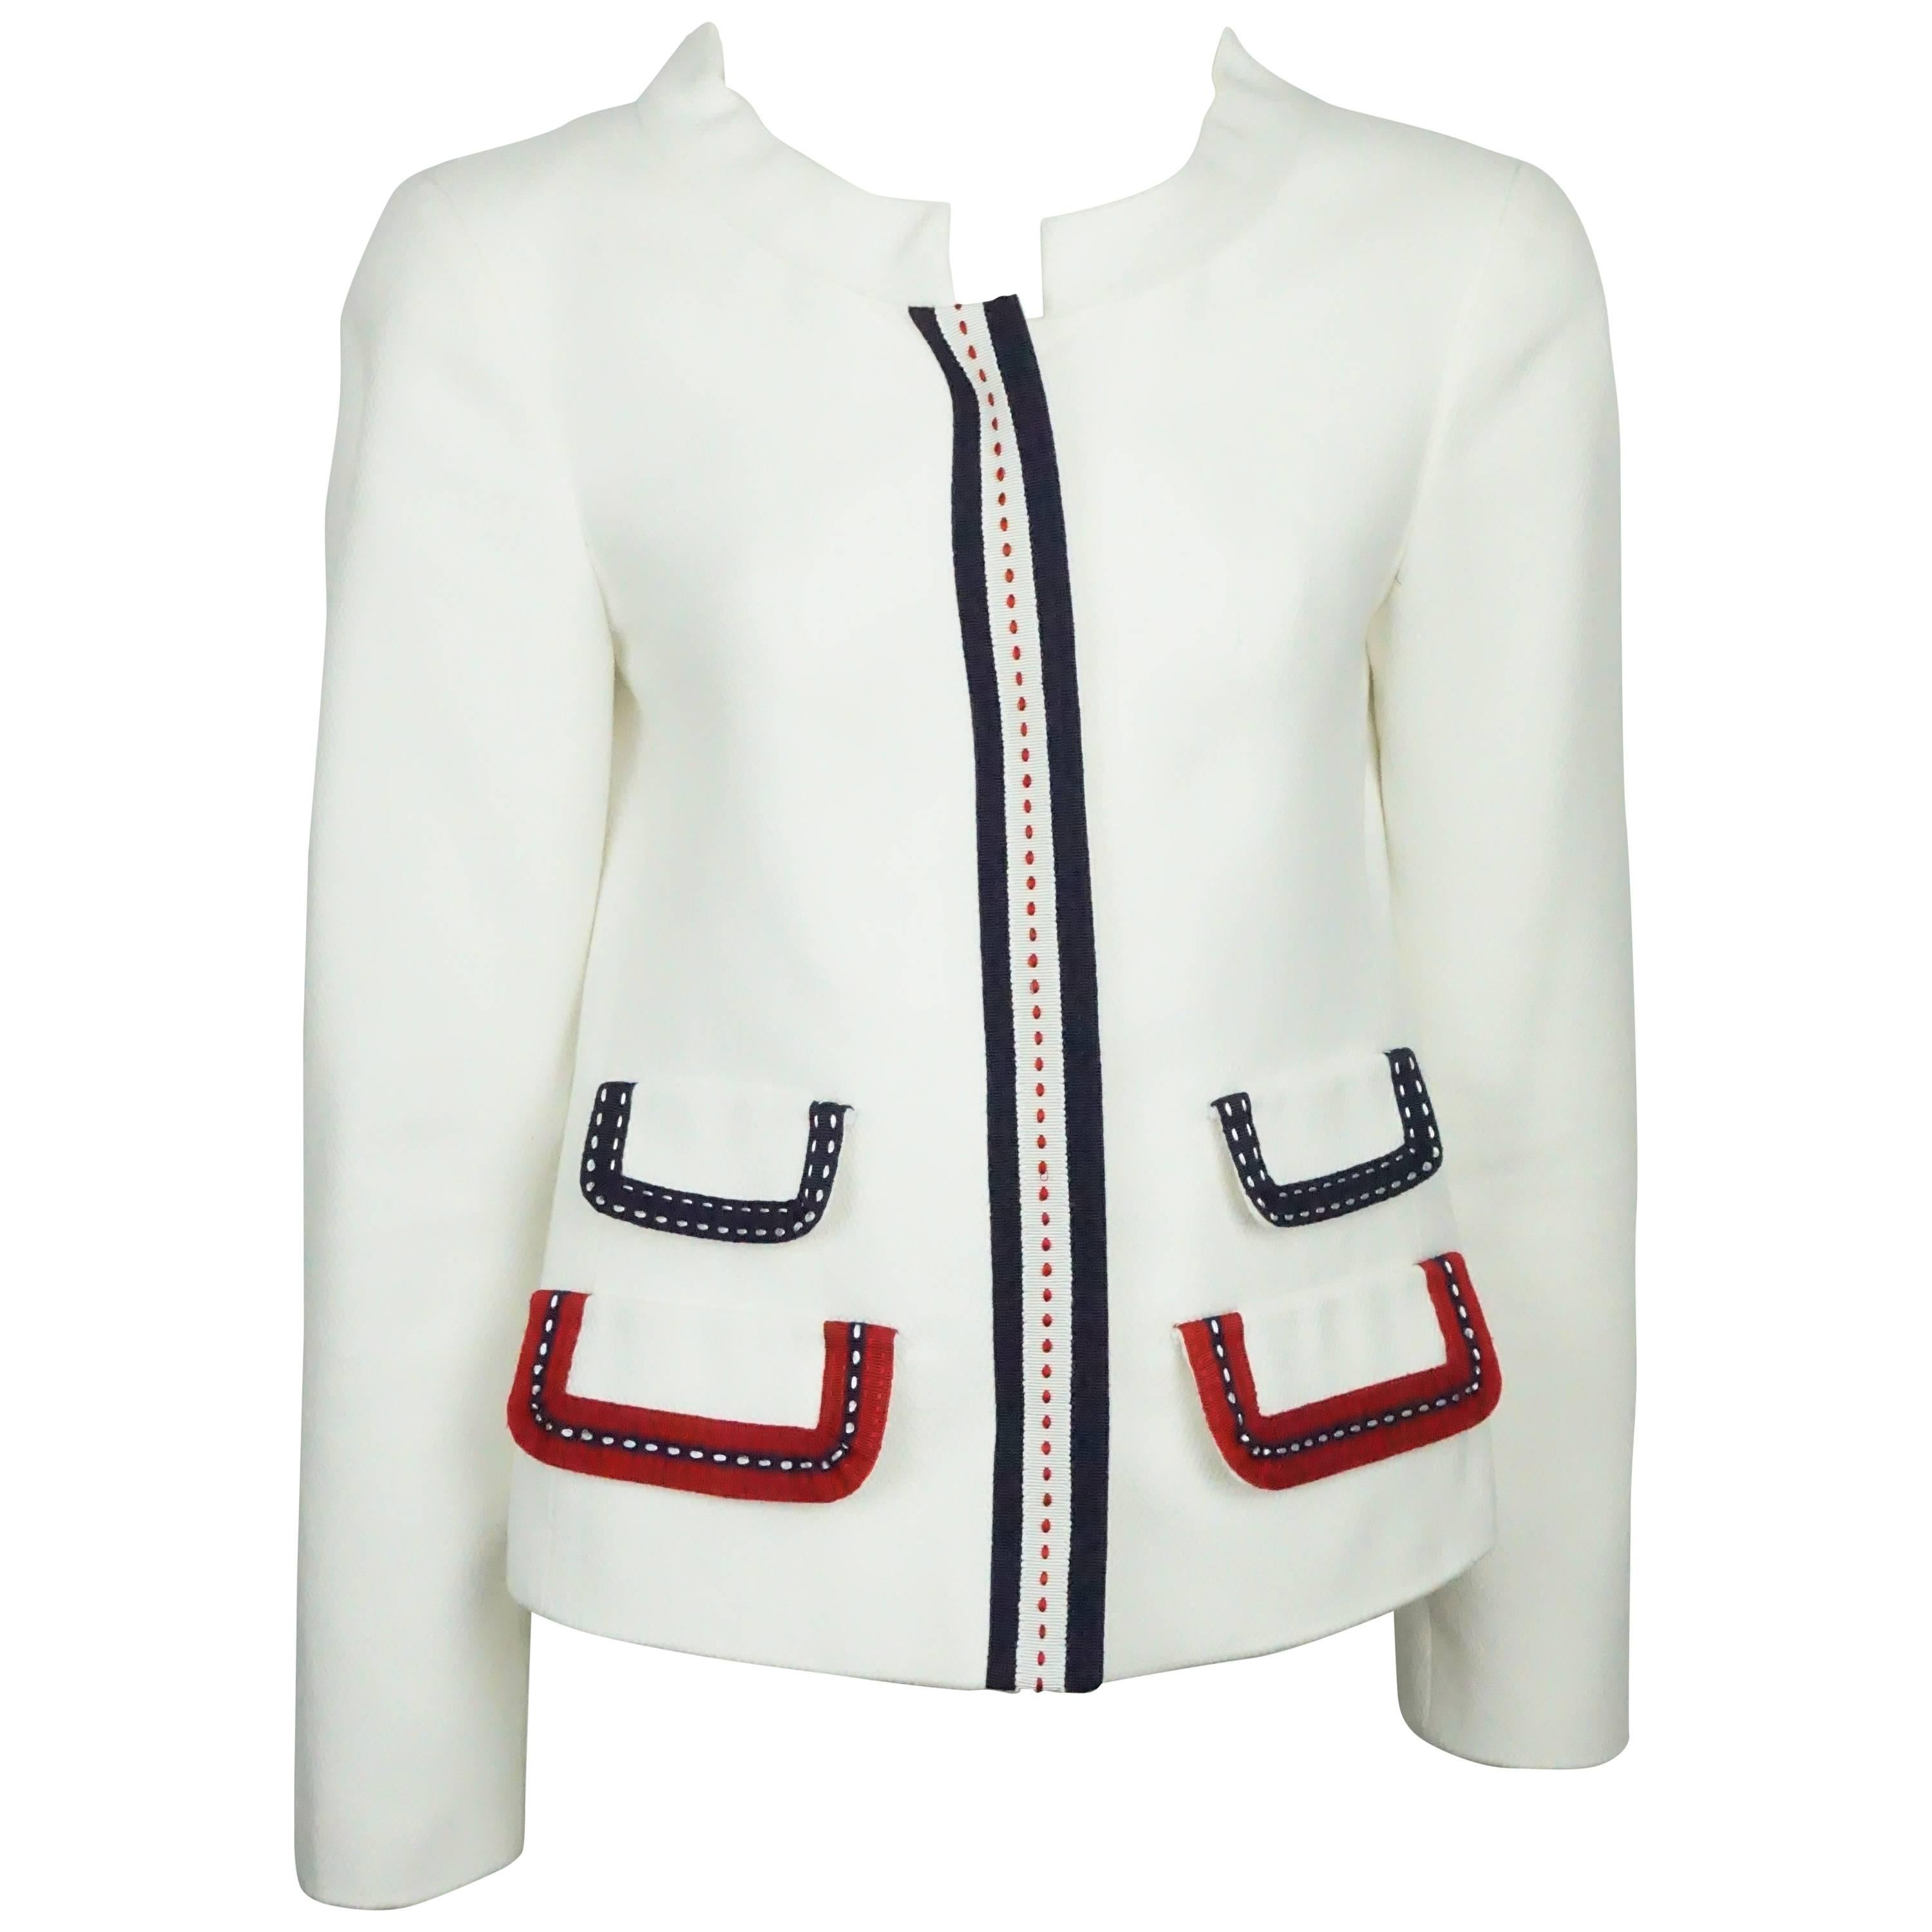 D & G White Cotton Jacket w/ Red/White/Blue Stitched Ribbon Trim - 42